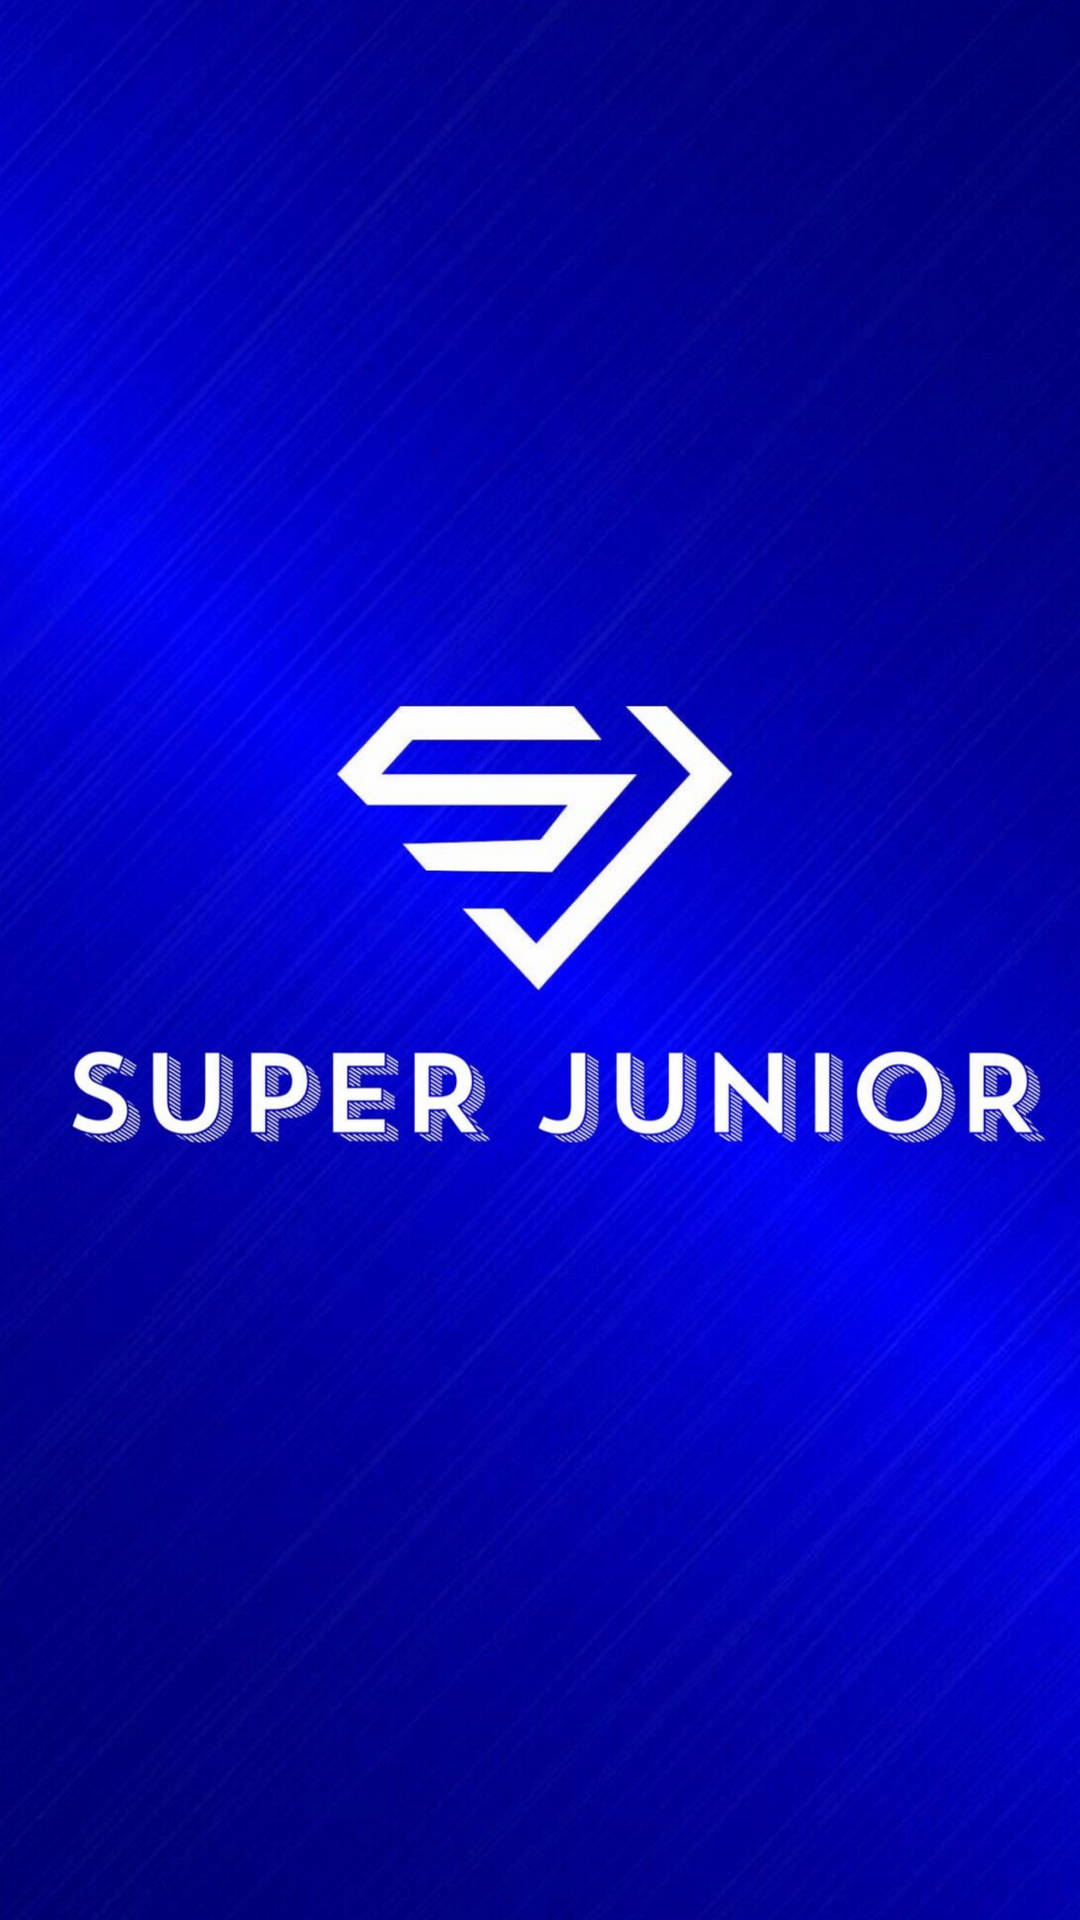 Super Junior Plain Logo Wallpaper